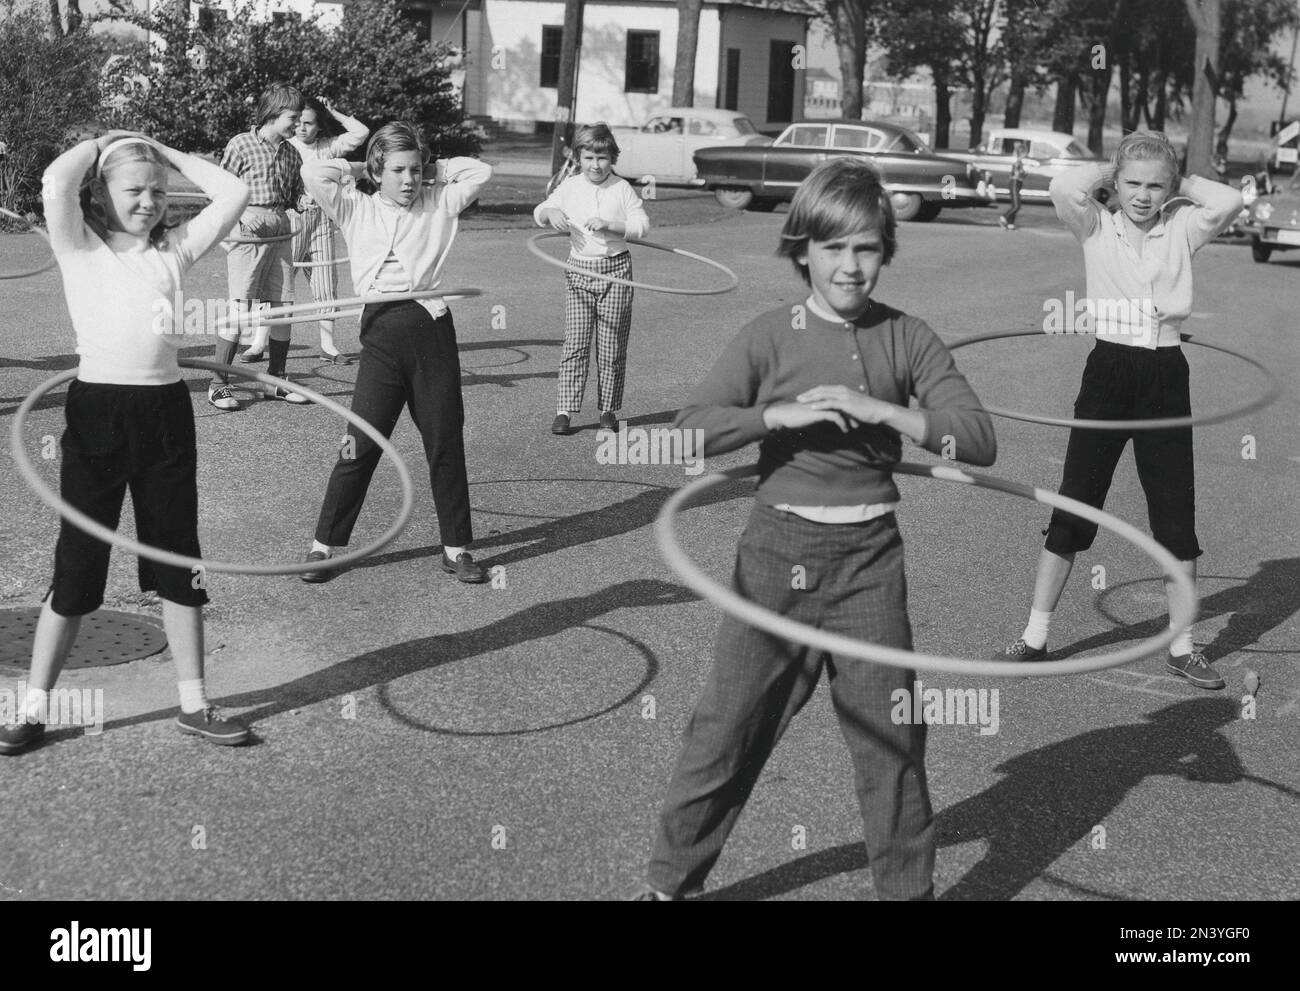 Hula hoop 1950s -Fotos und -Bildmaterial in hoher Auflösung – Alamy